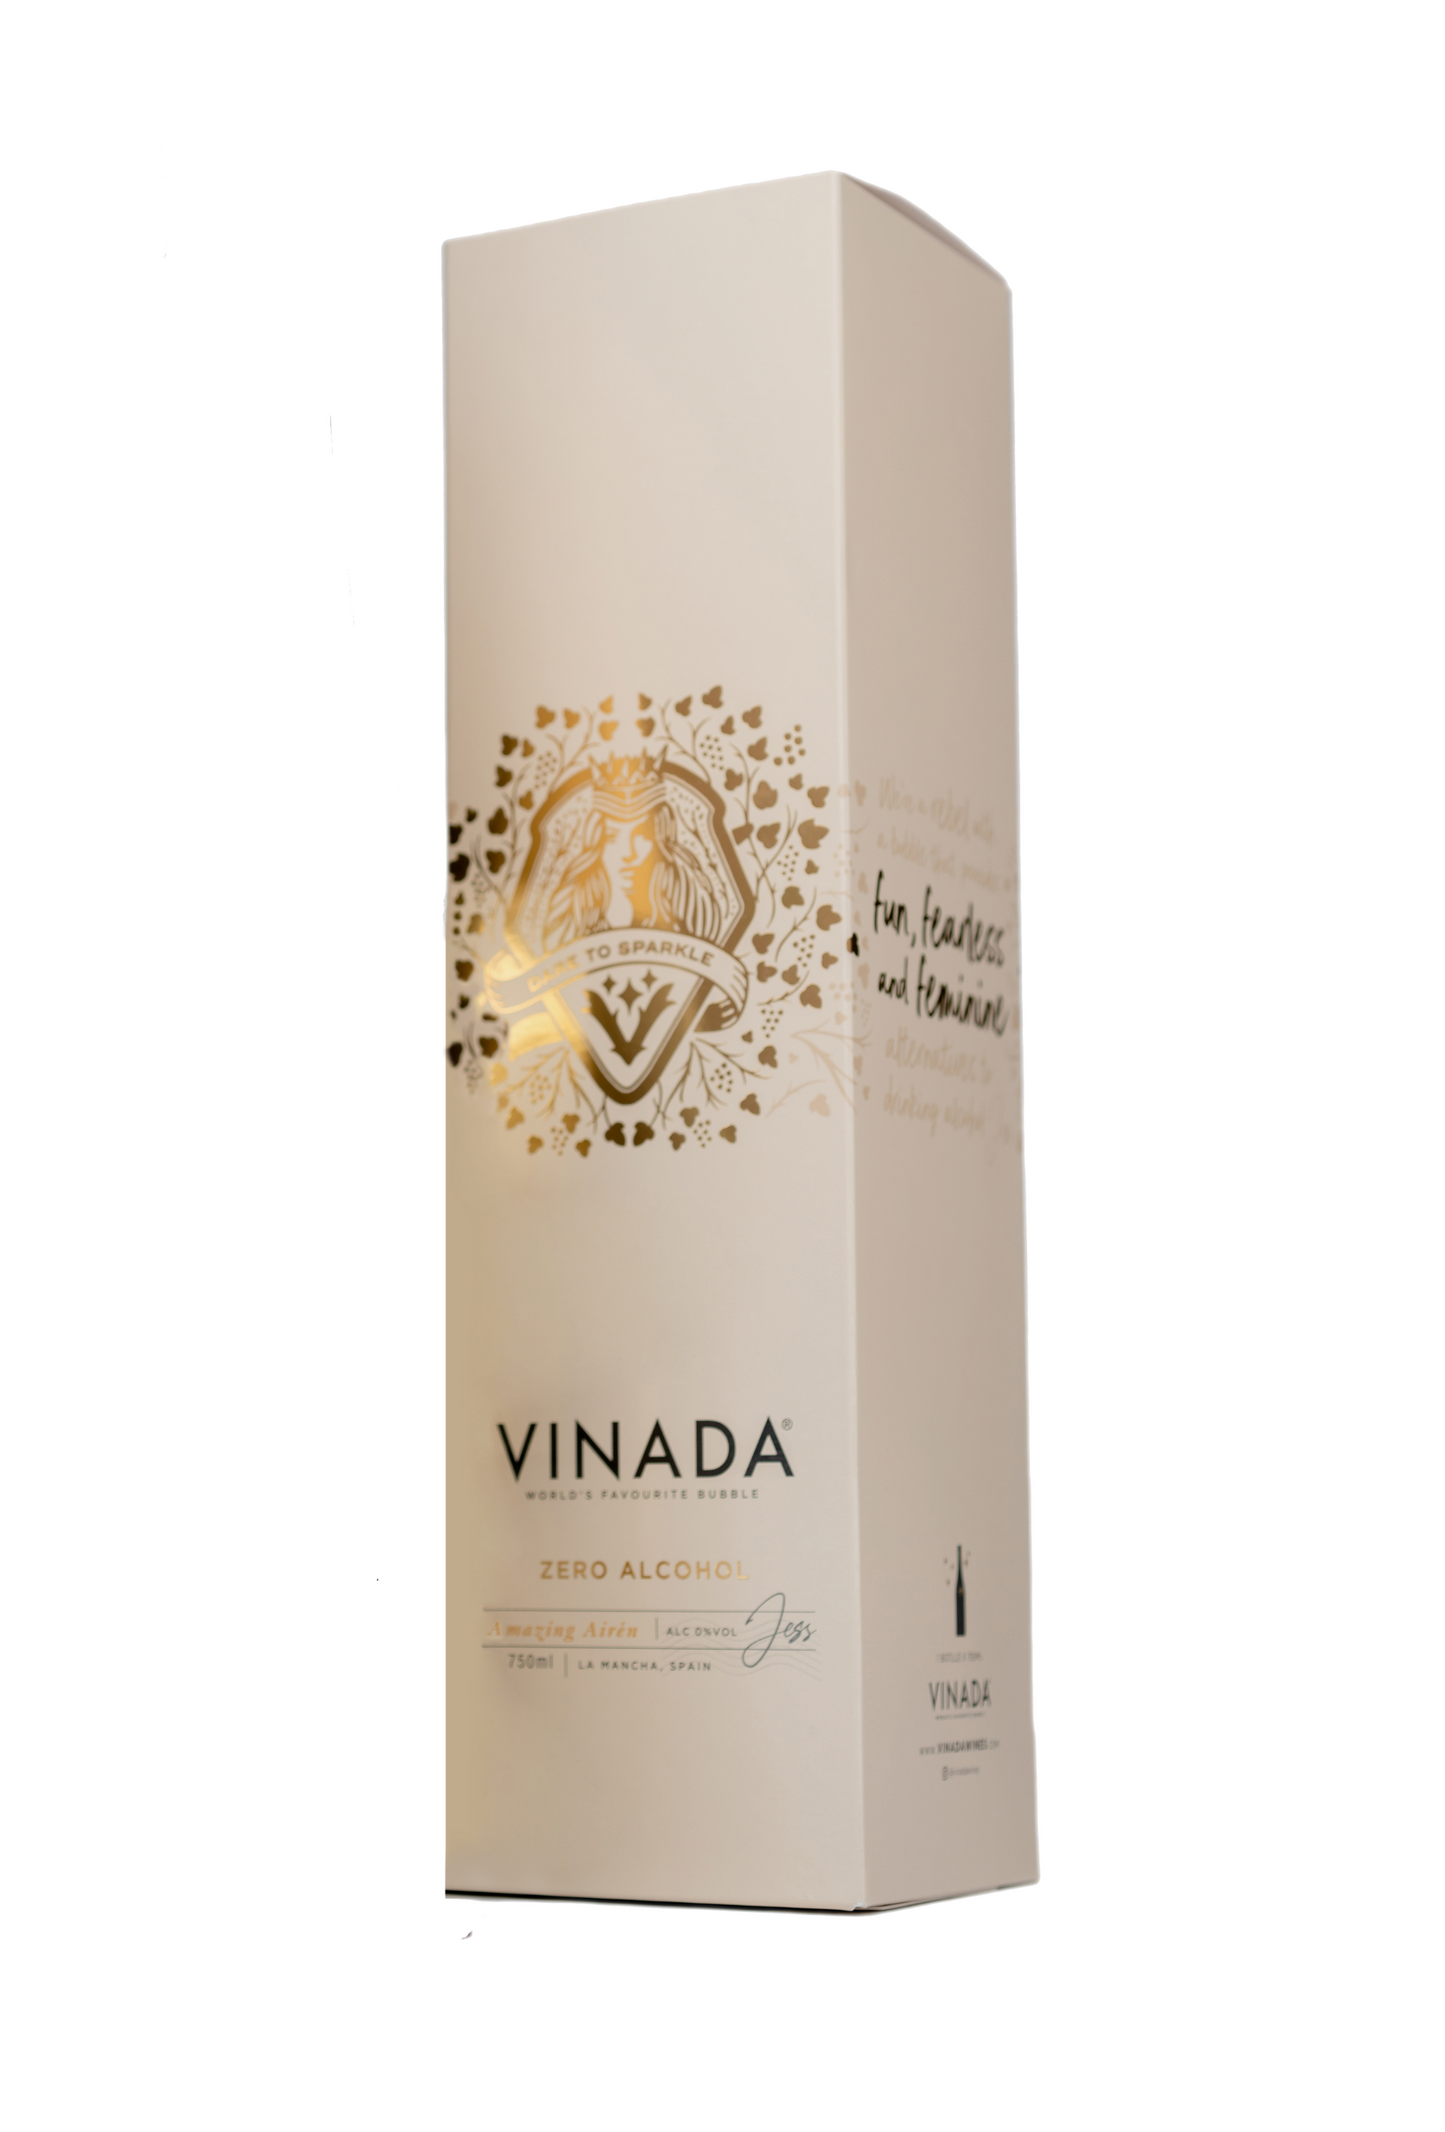 VINADA® - AMAZING AIRÉN GOLD (0%) 750 ML GIFTSET